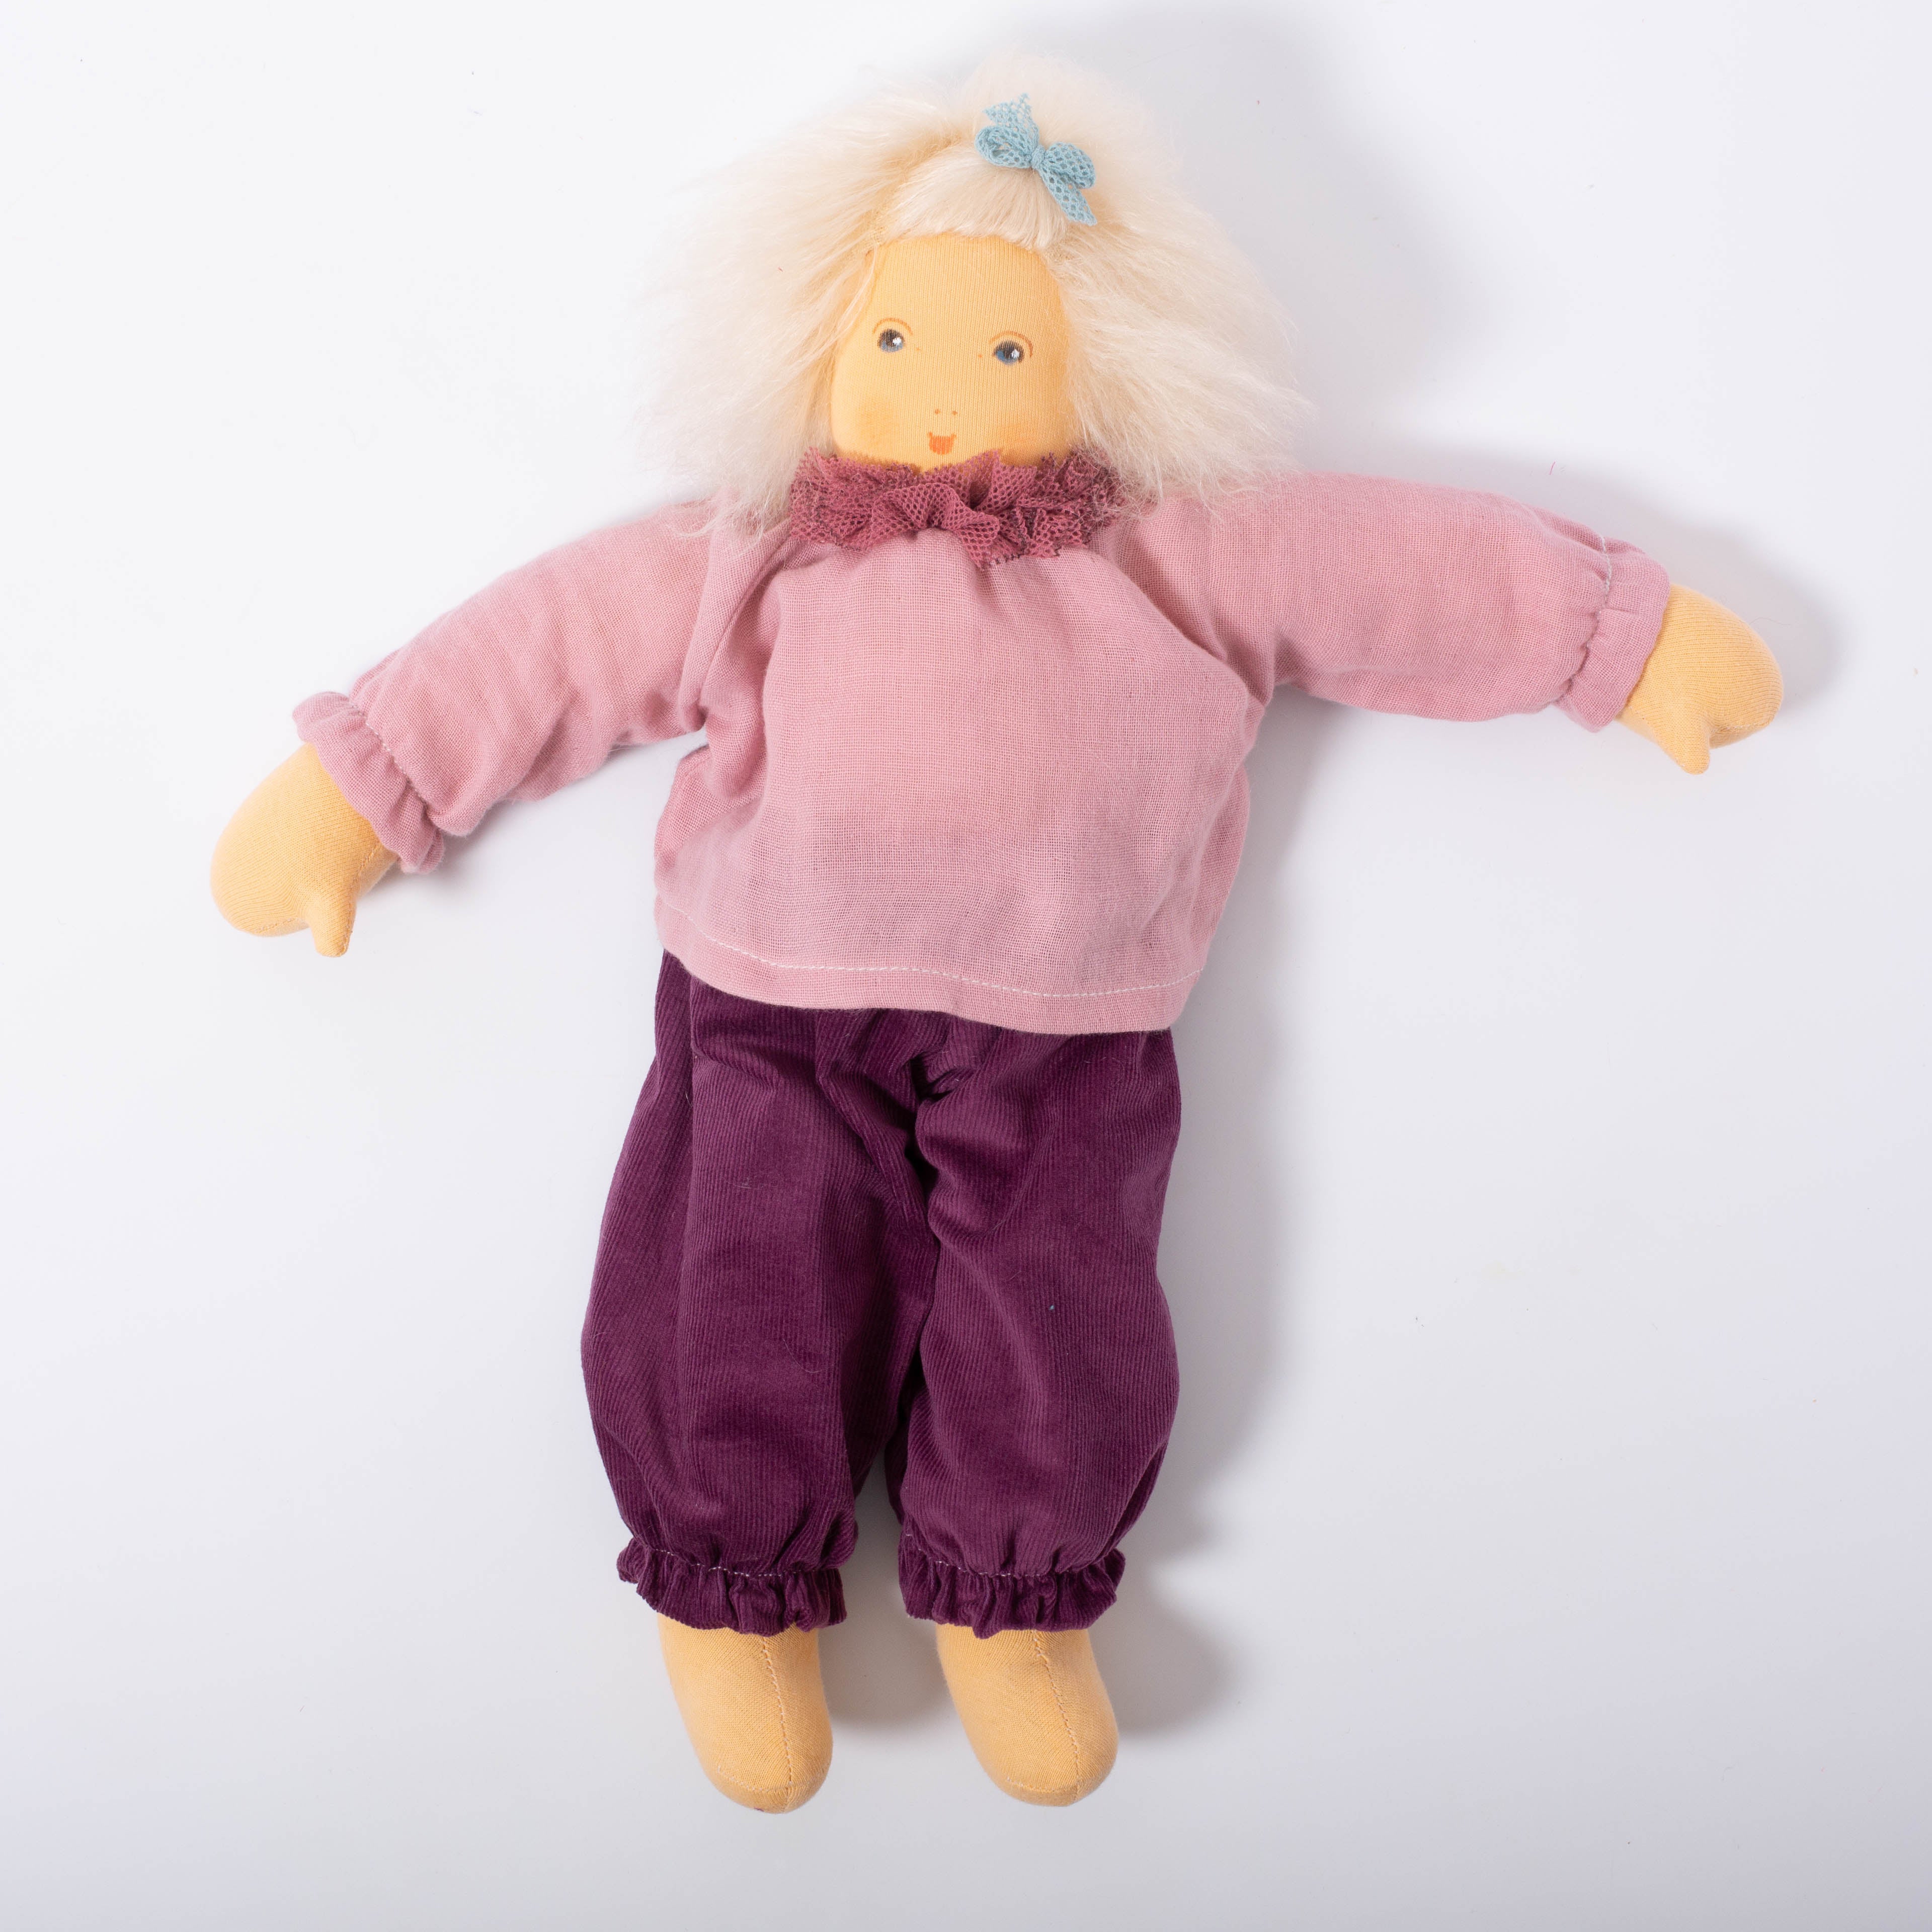 nanchen waldorf doll